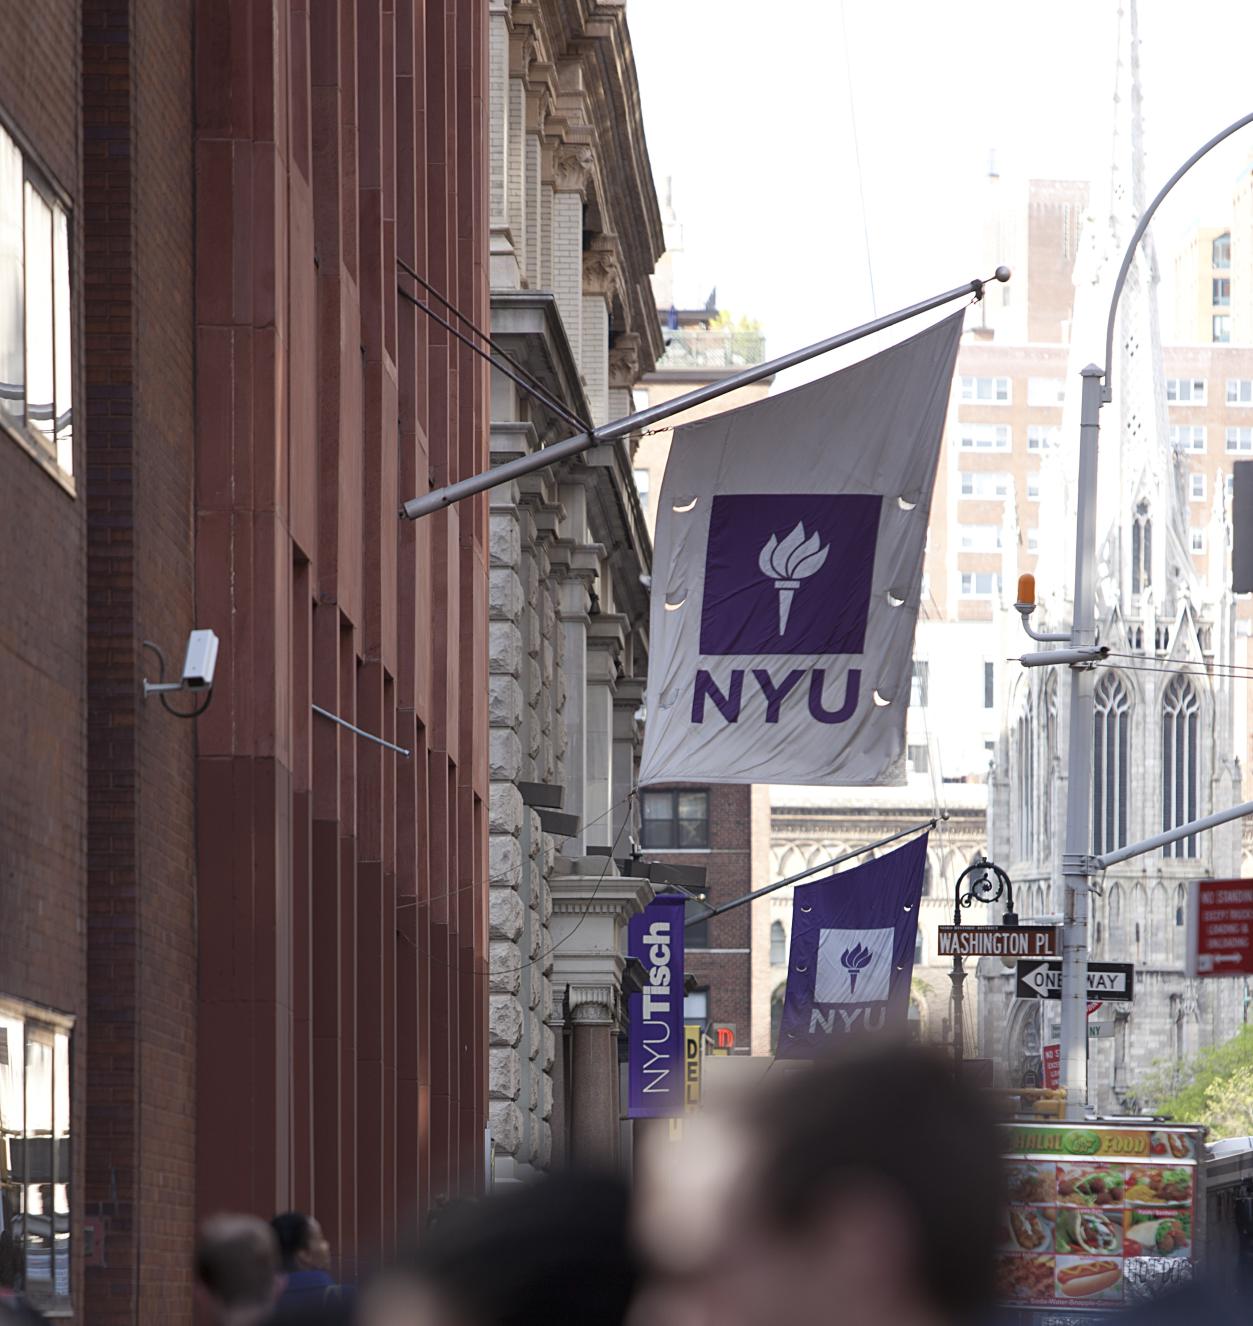 View of sidewalk with blurry crowds below an NYU Banner